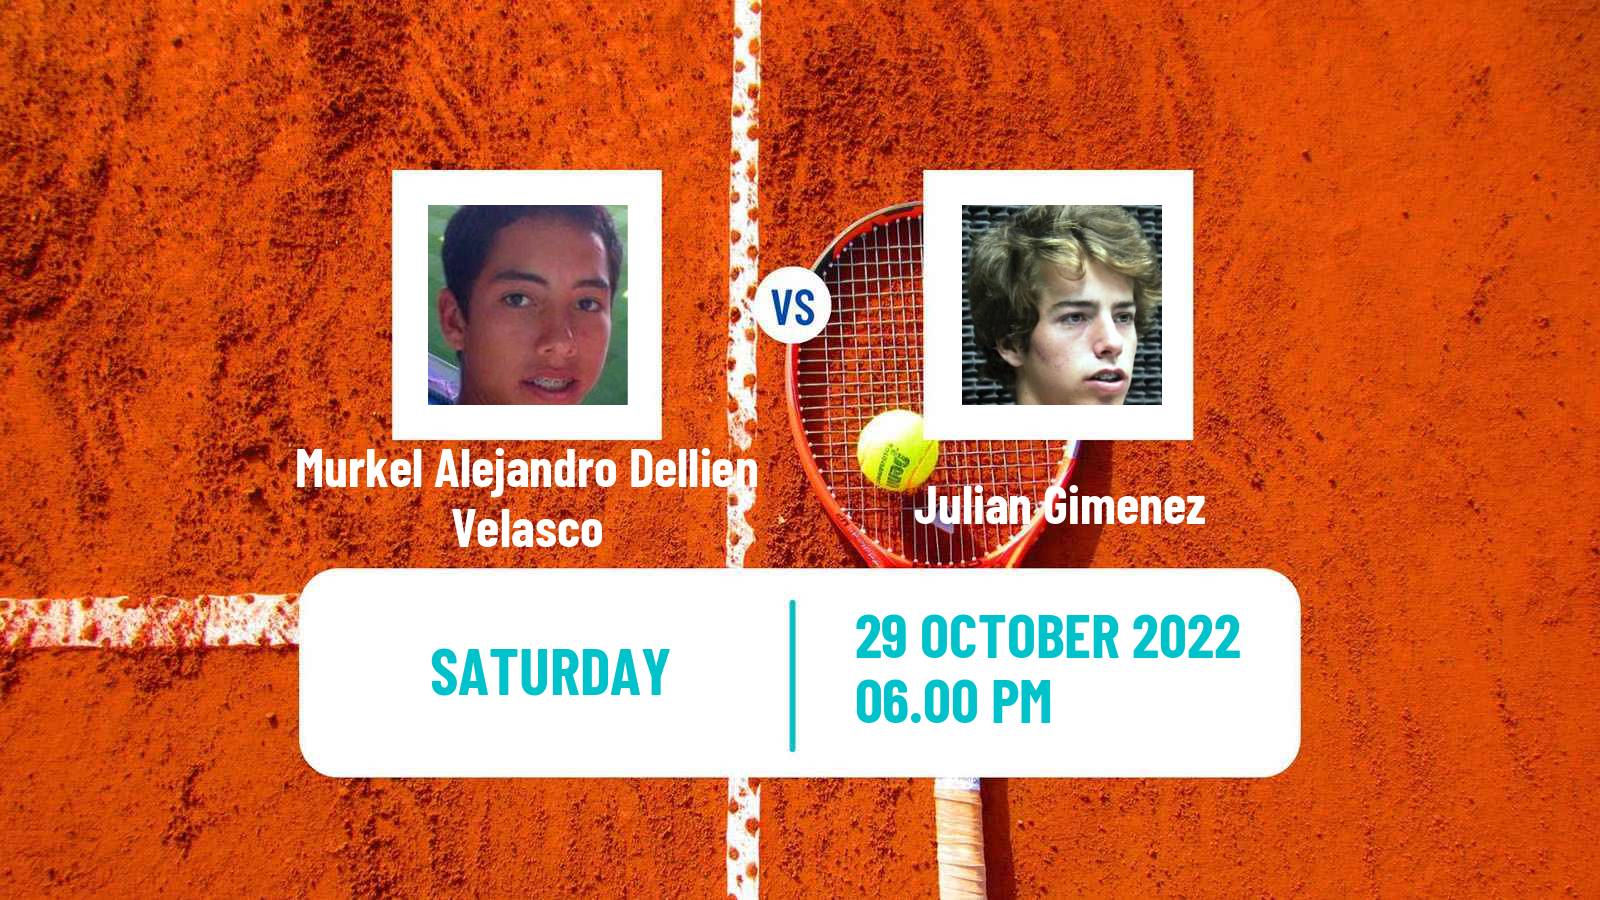 Tennis ITF Tournaments Murkel Alejandro Dellien Velasco - Julian Gimenez